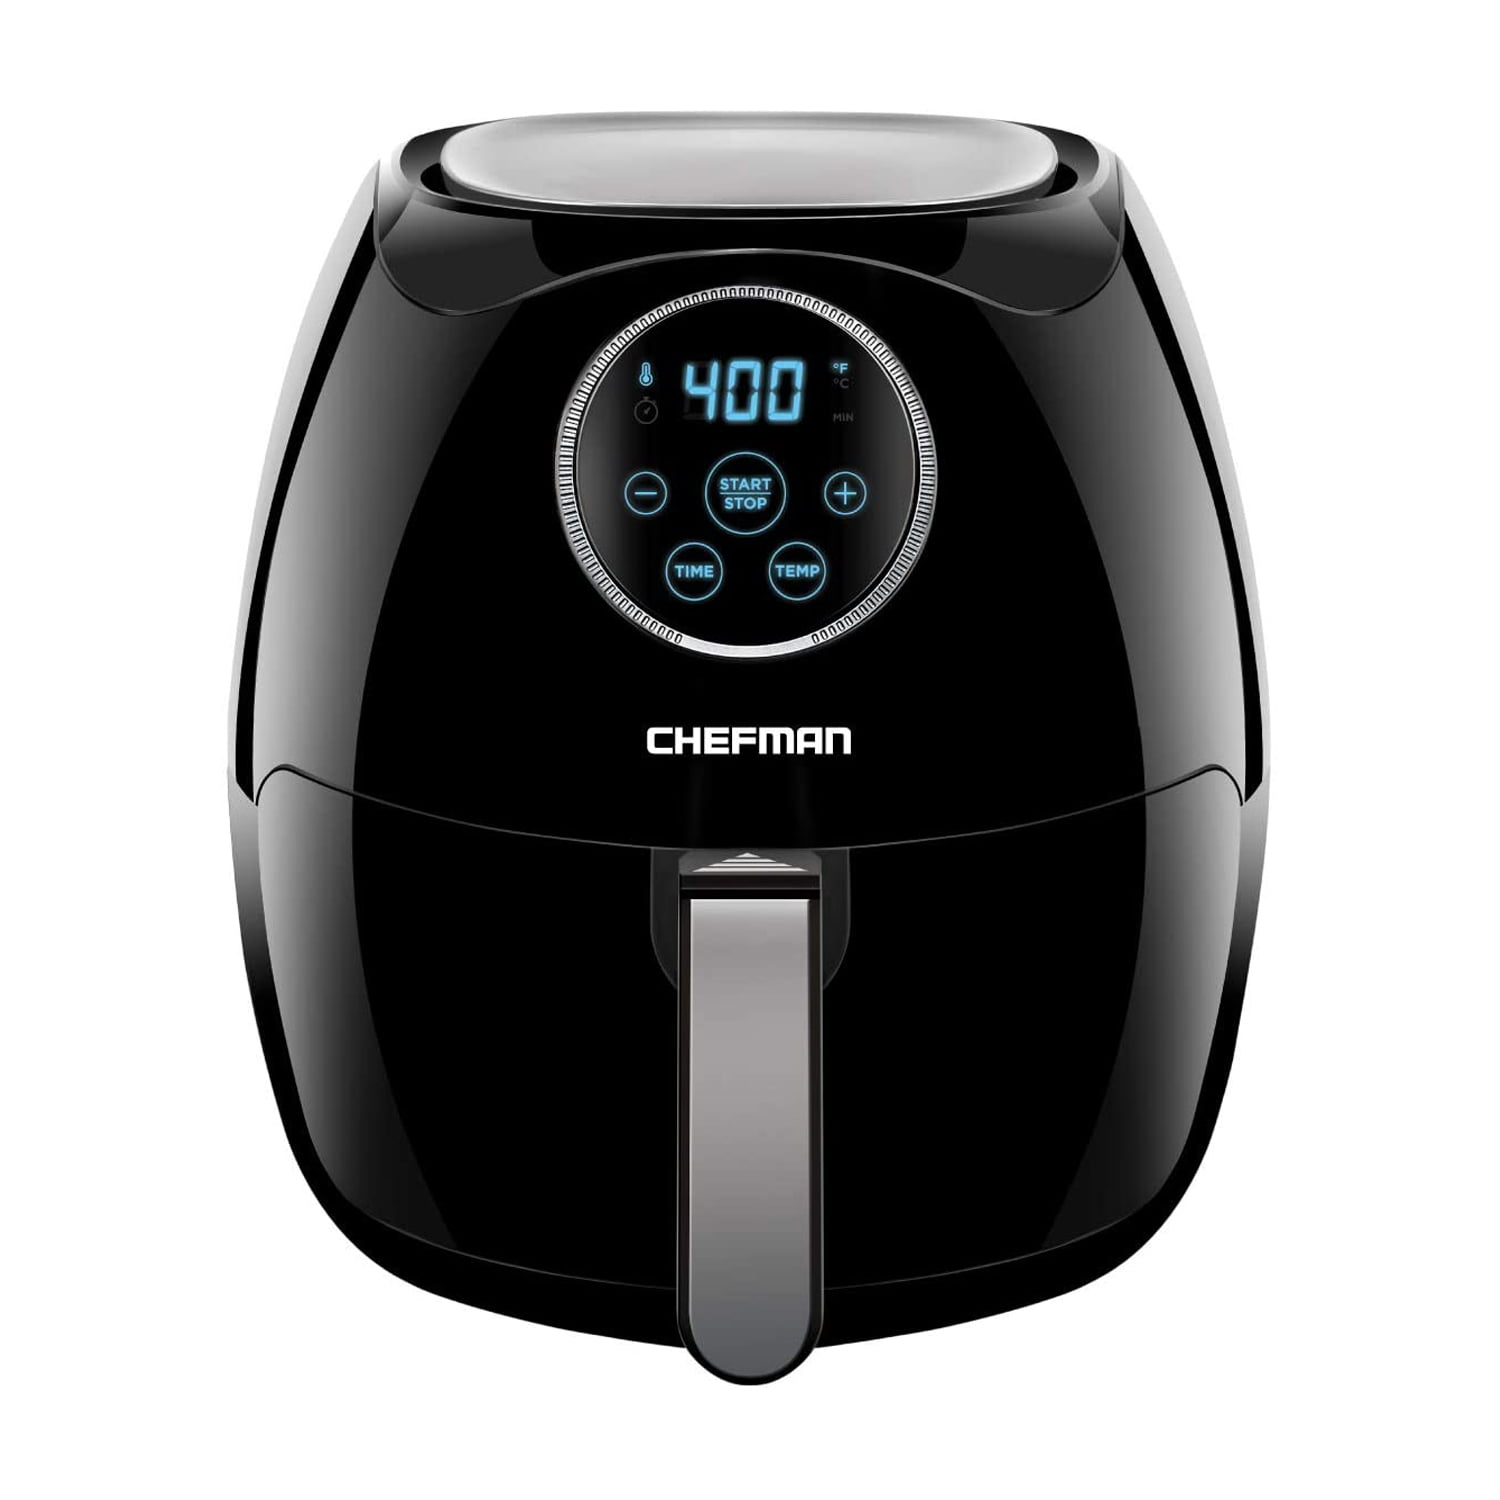 Chefman Digital 6.5 Liter Rapid Temperature Controlling Air Fryer